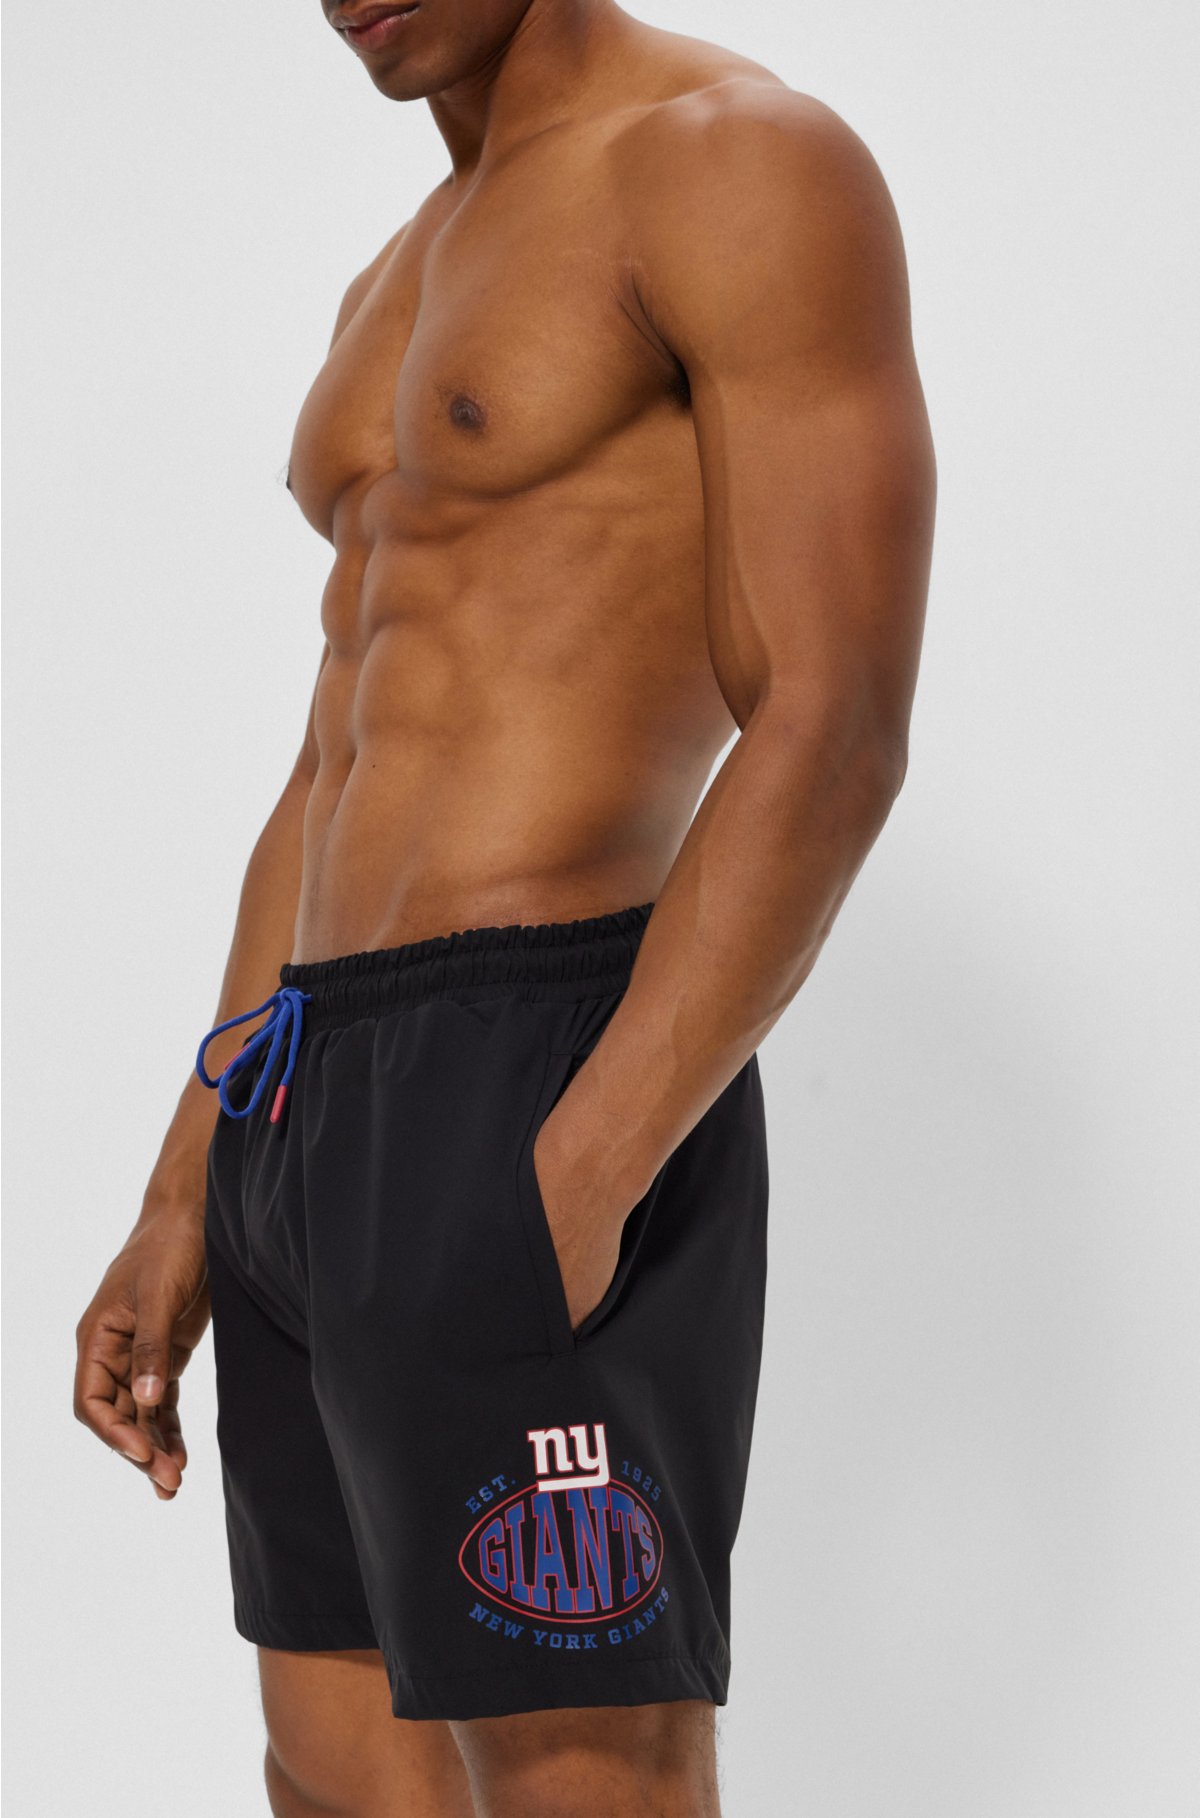 BOSS x NFL quick-dry swim shorts with collaborative branding, Giants